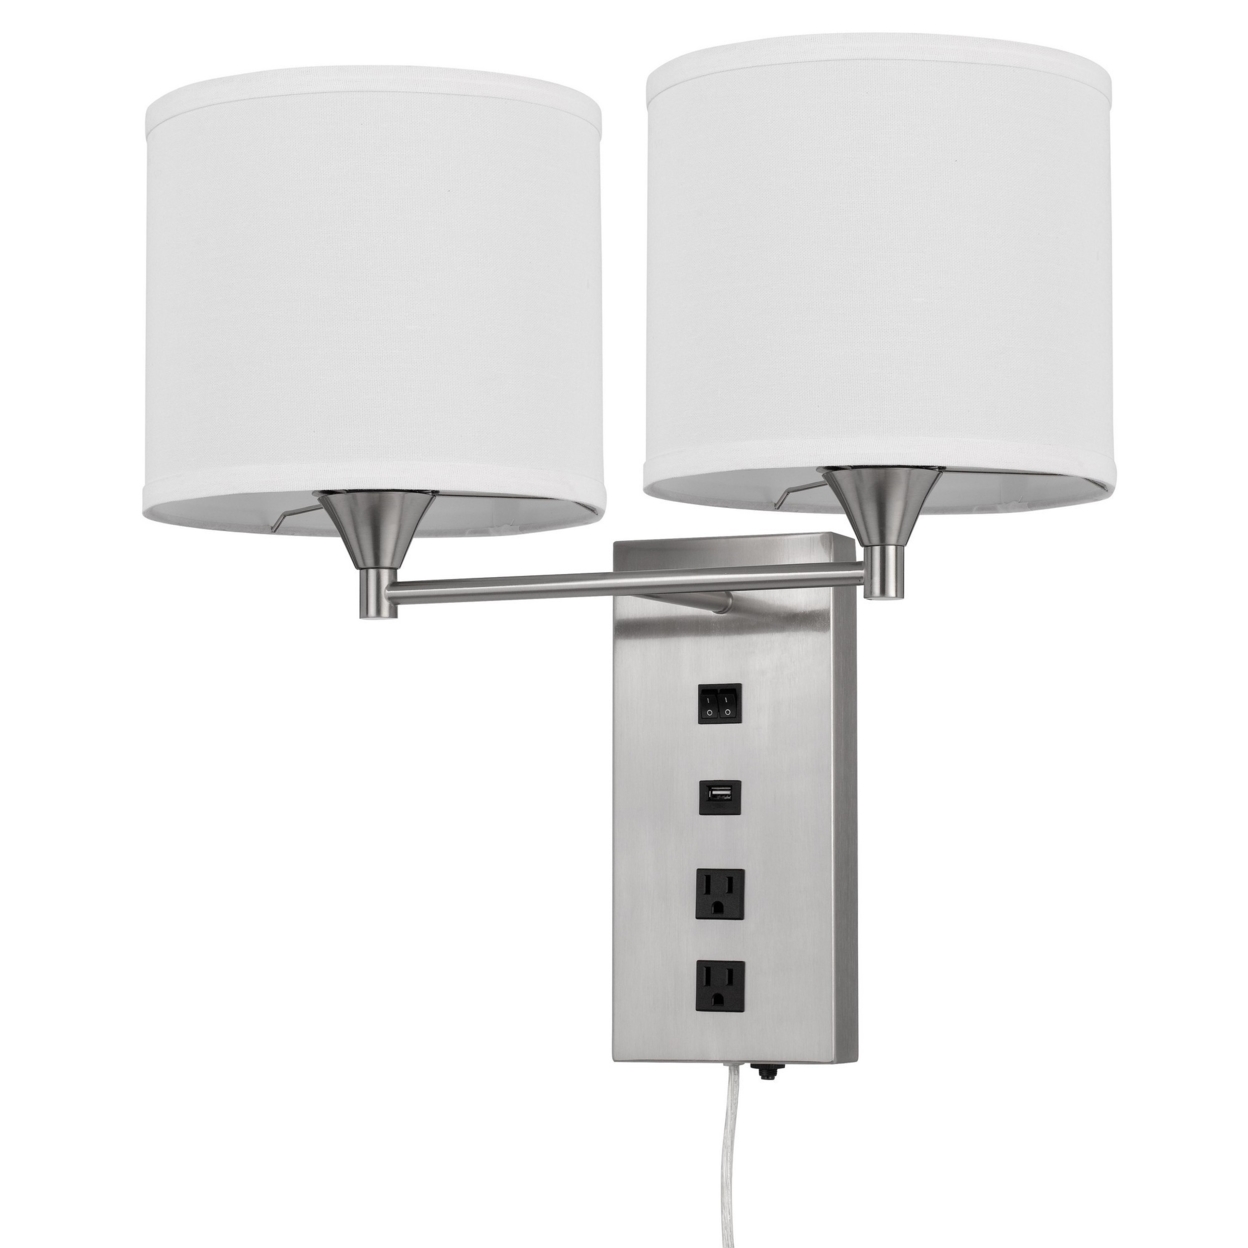 Rexi Modern Metal Wall Lamp, 2 Shades, USB, 2 Power Outlets, White, Silver- Saltoro Sherpi